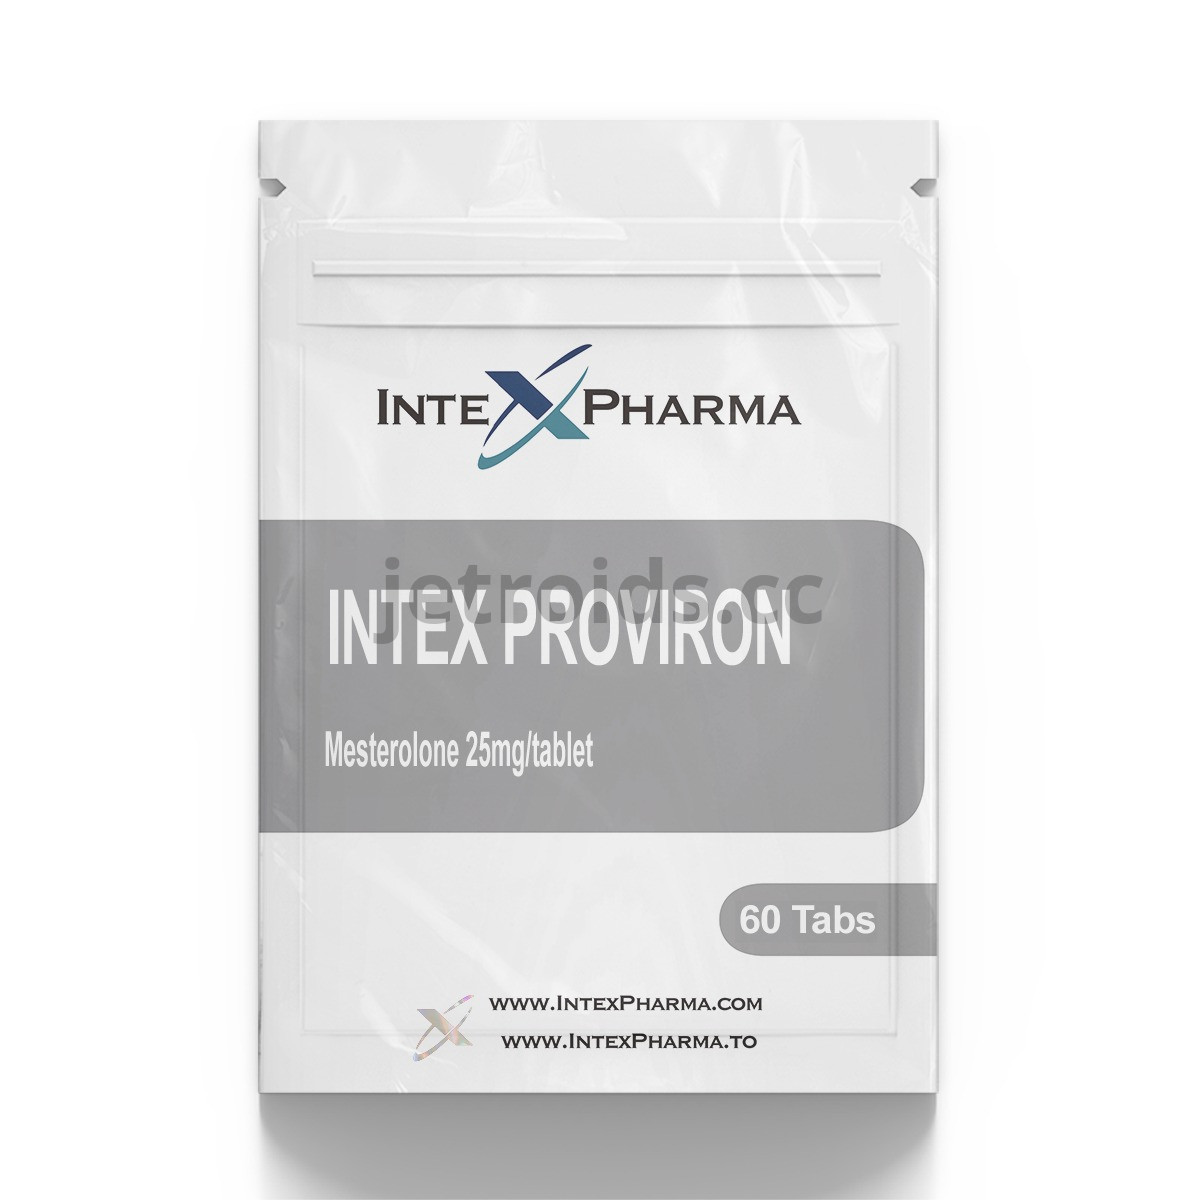 IntexPharma Intex Proviron Product Info